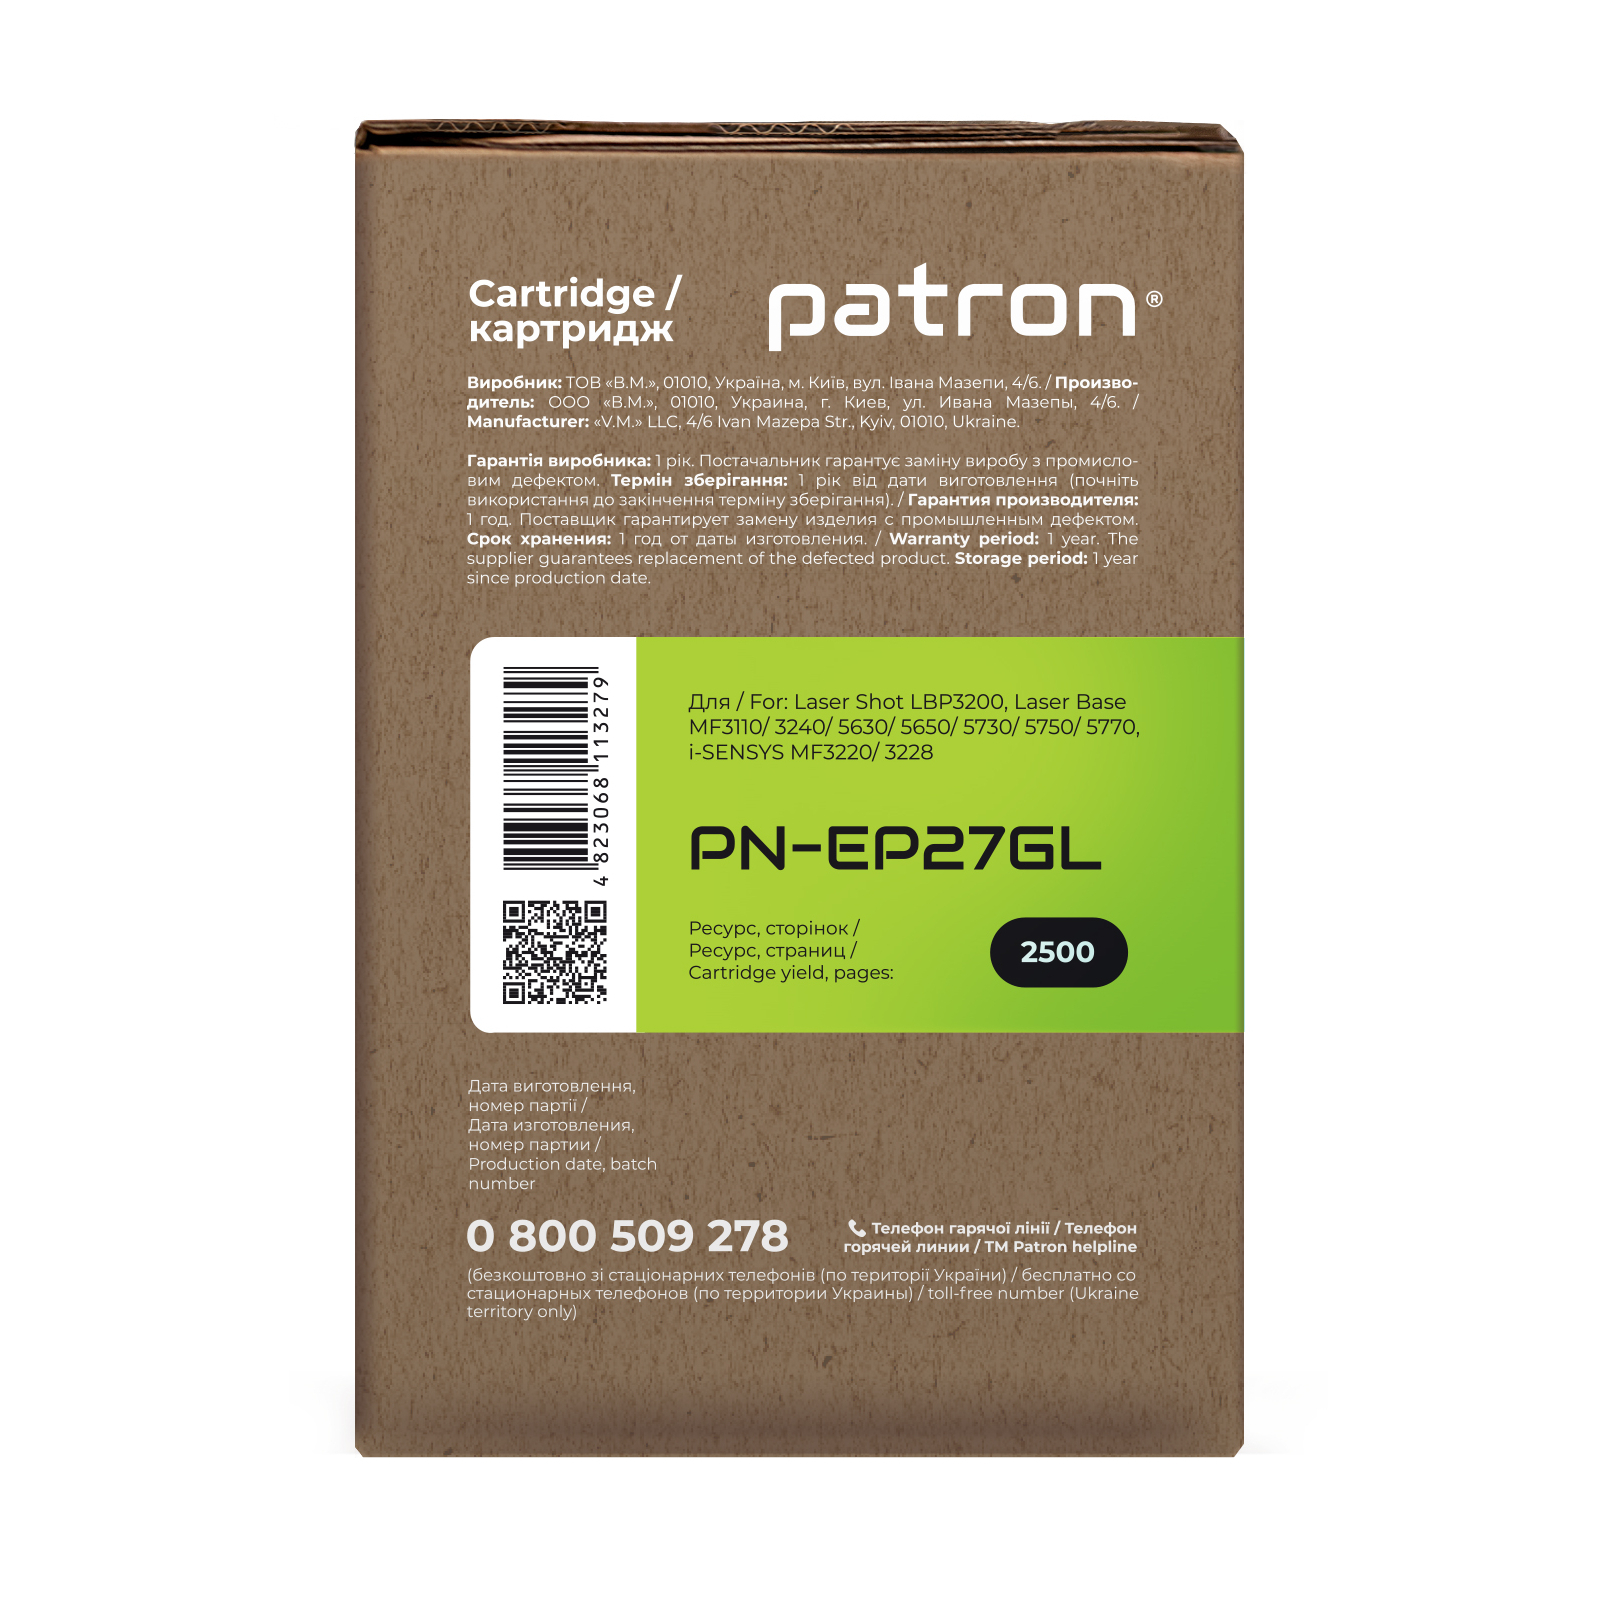 Картридж Patron CANON EP-27 GREEN Label (PN-EP27GL) изображение 3